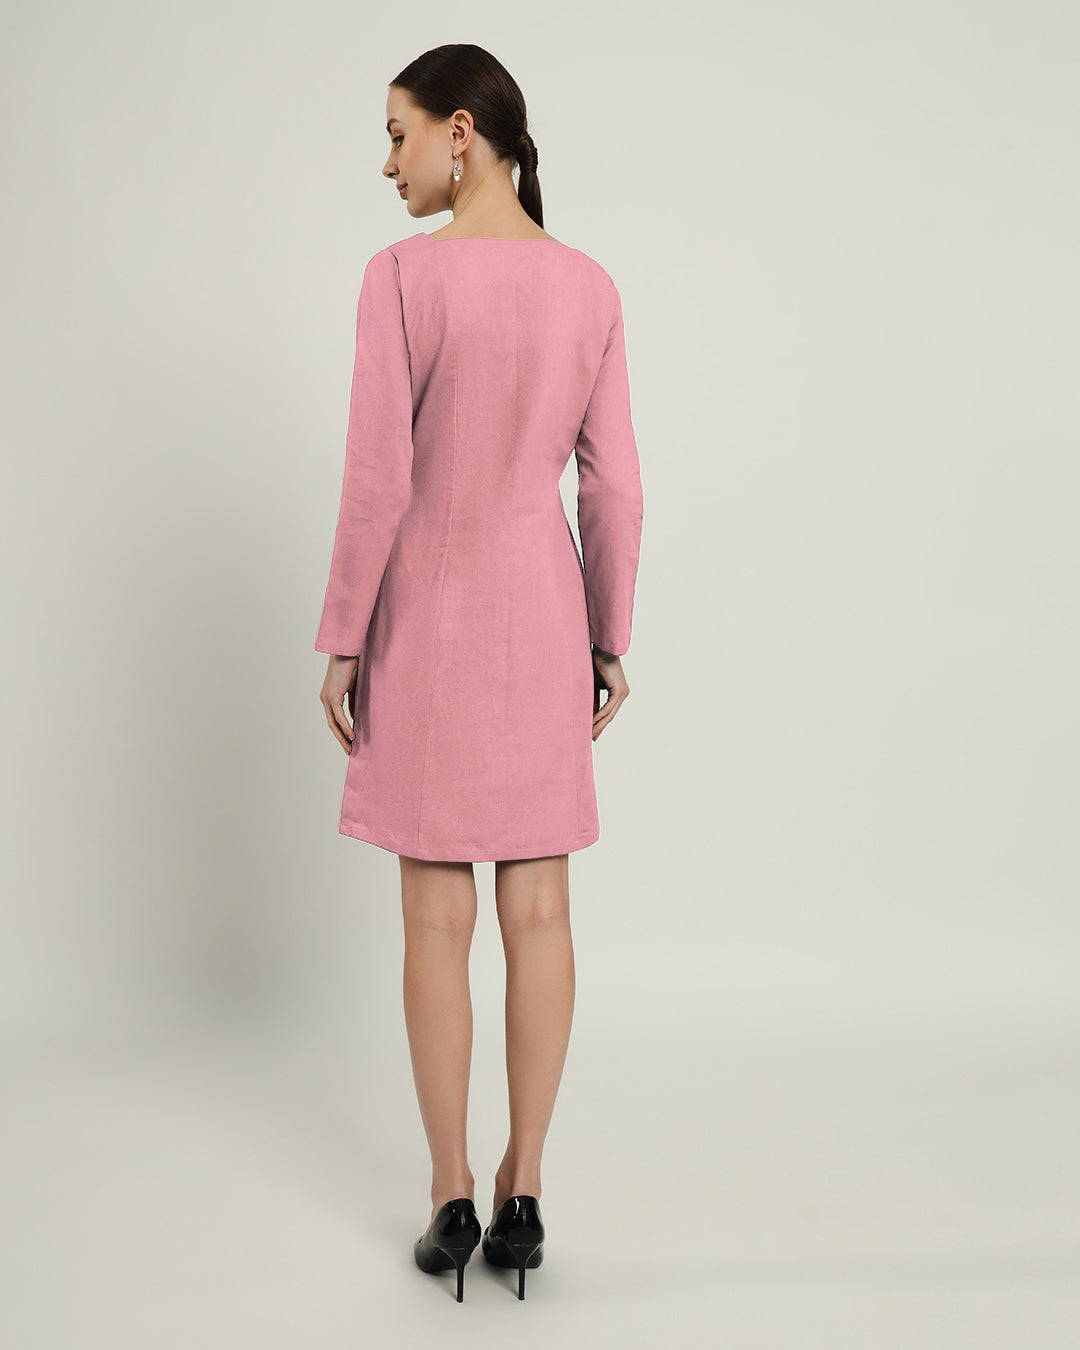 The Auburn Fondant Pink Cotton Dress